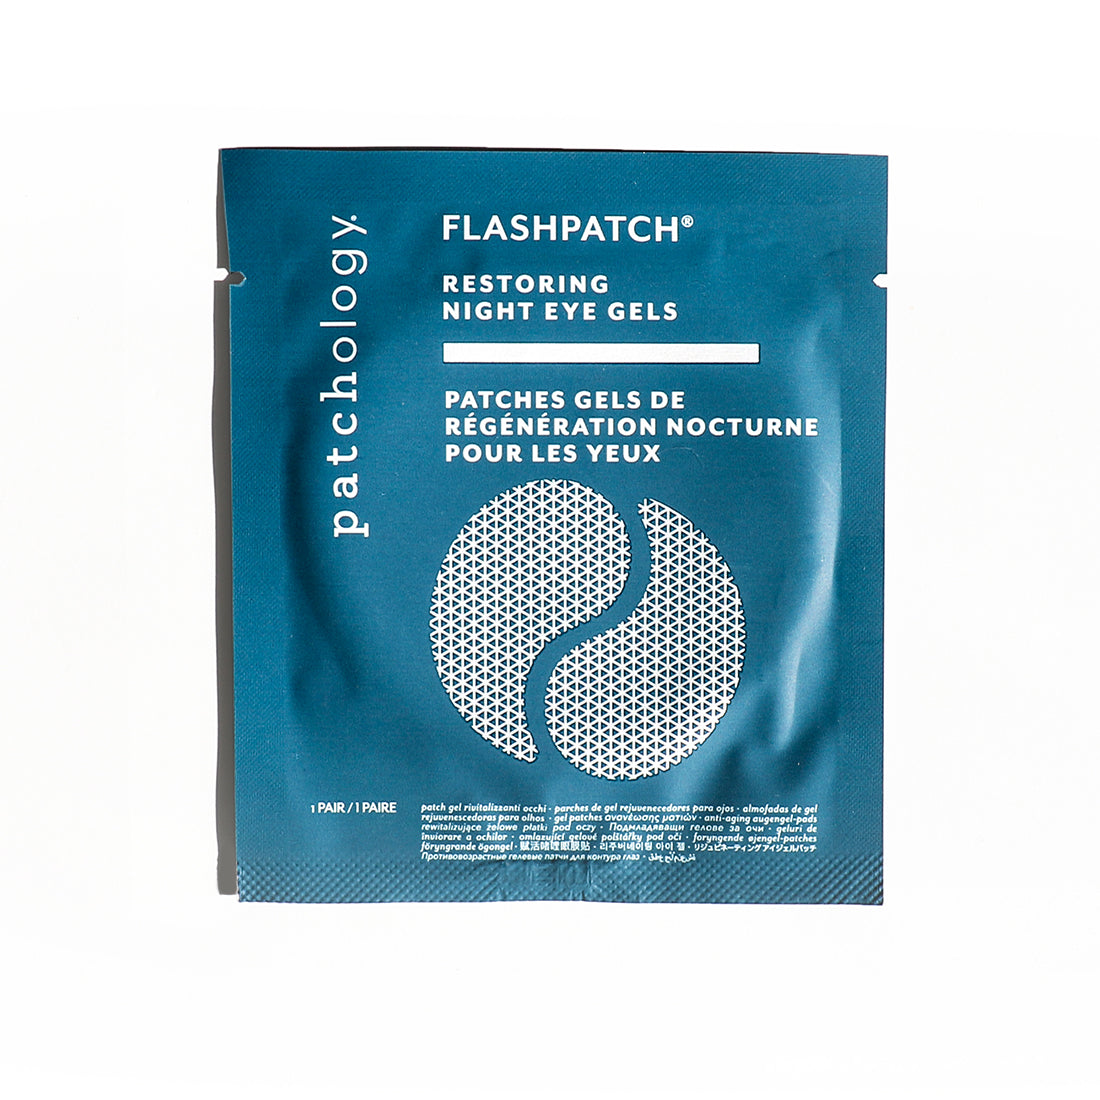 FlashPatch® Restoring Night Eye Gels: 5 Pack